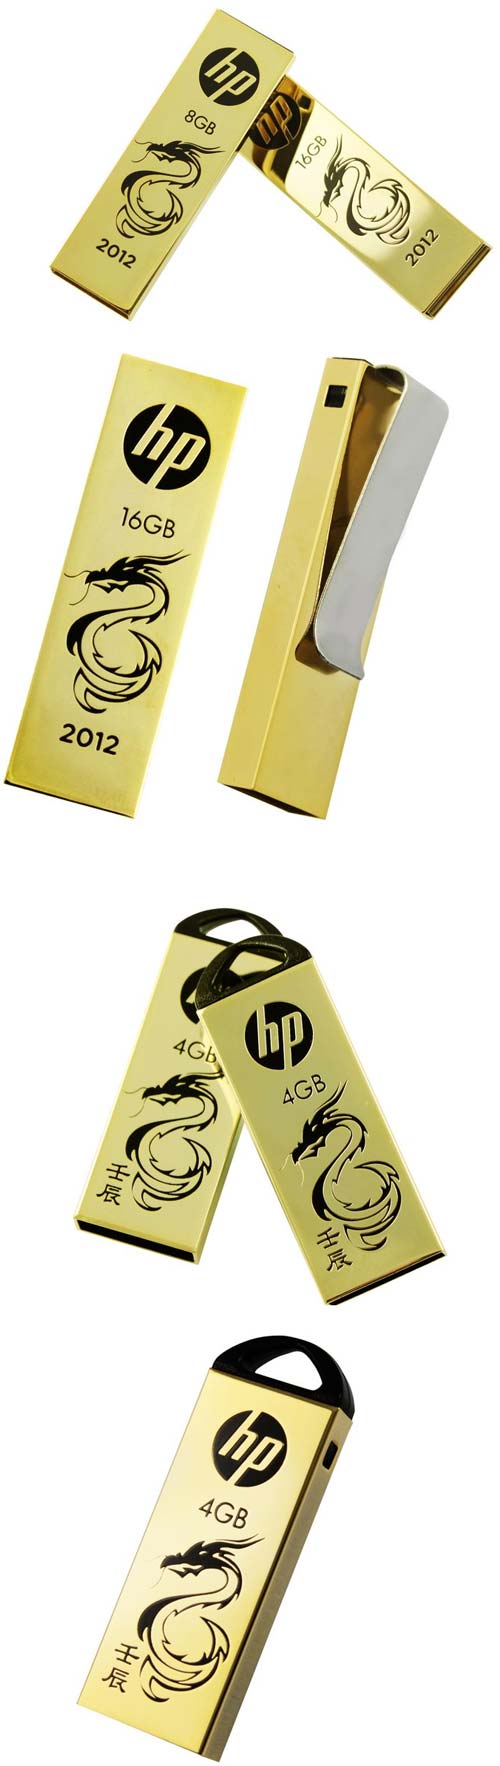 Новые золотые флешки от PNY с драконом на корпусе - HPv218g и HPv228g